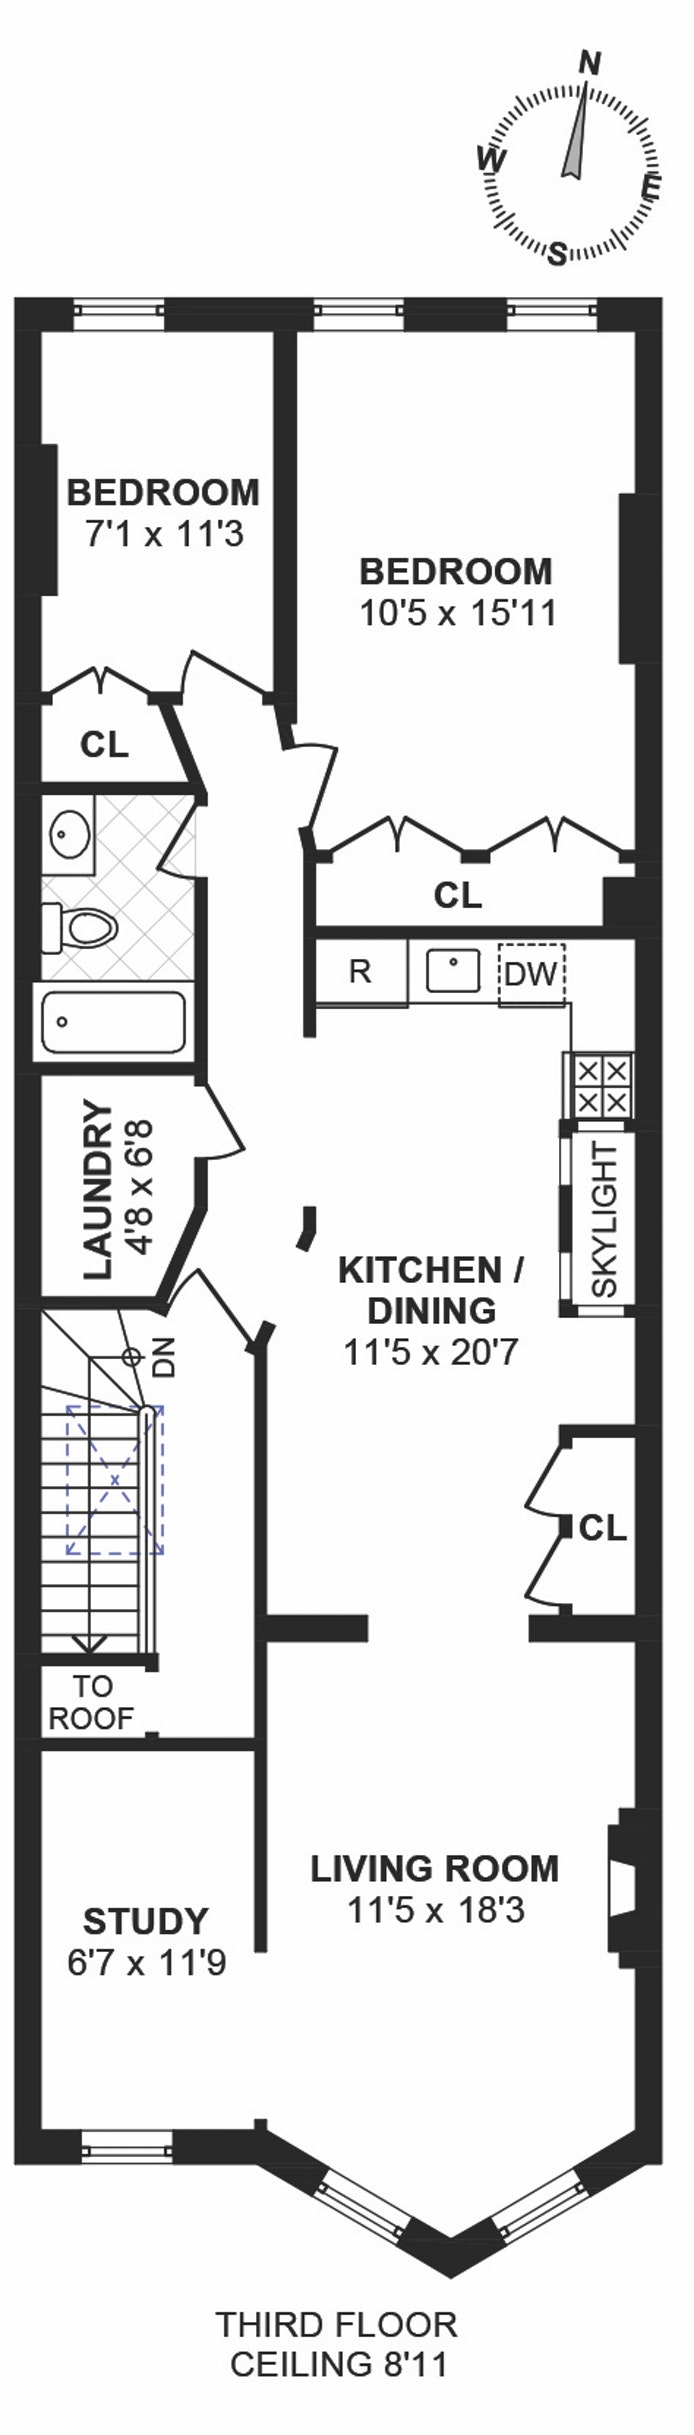 Floorplan for 165 Monroe Street, 3